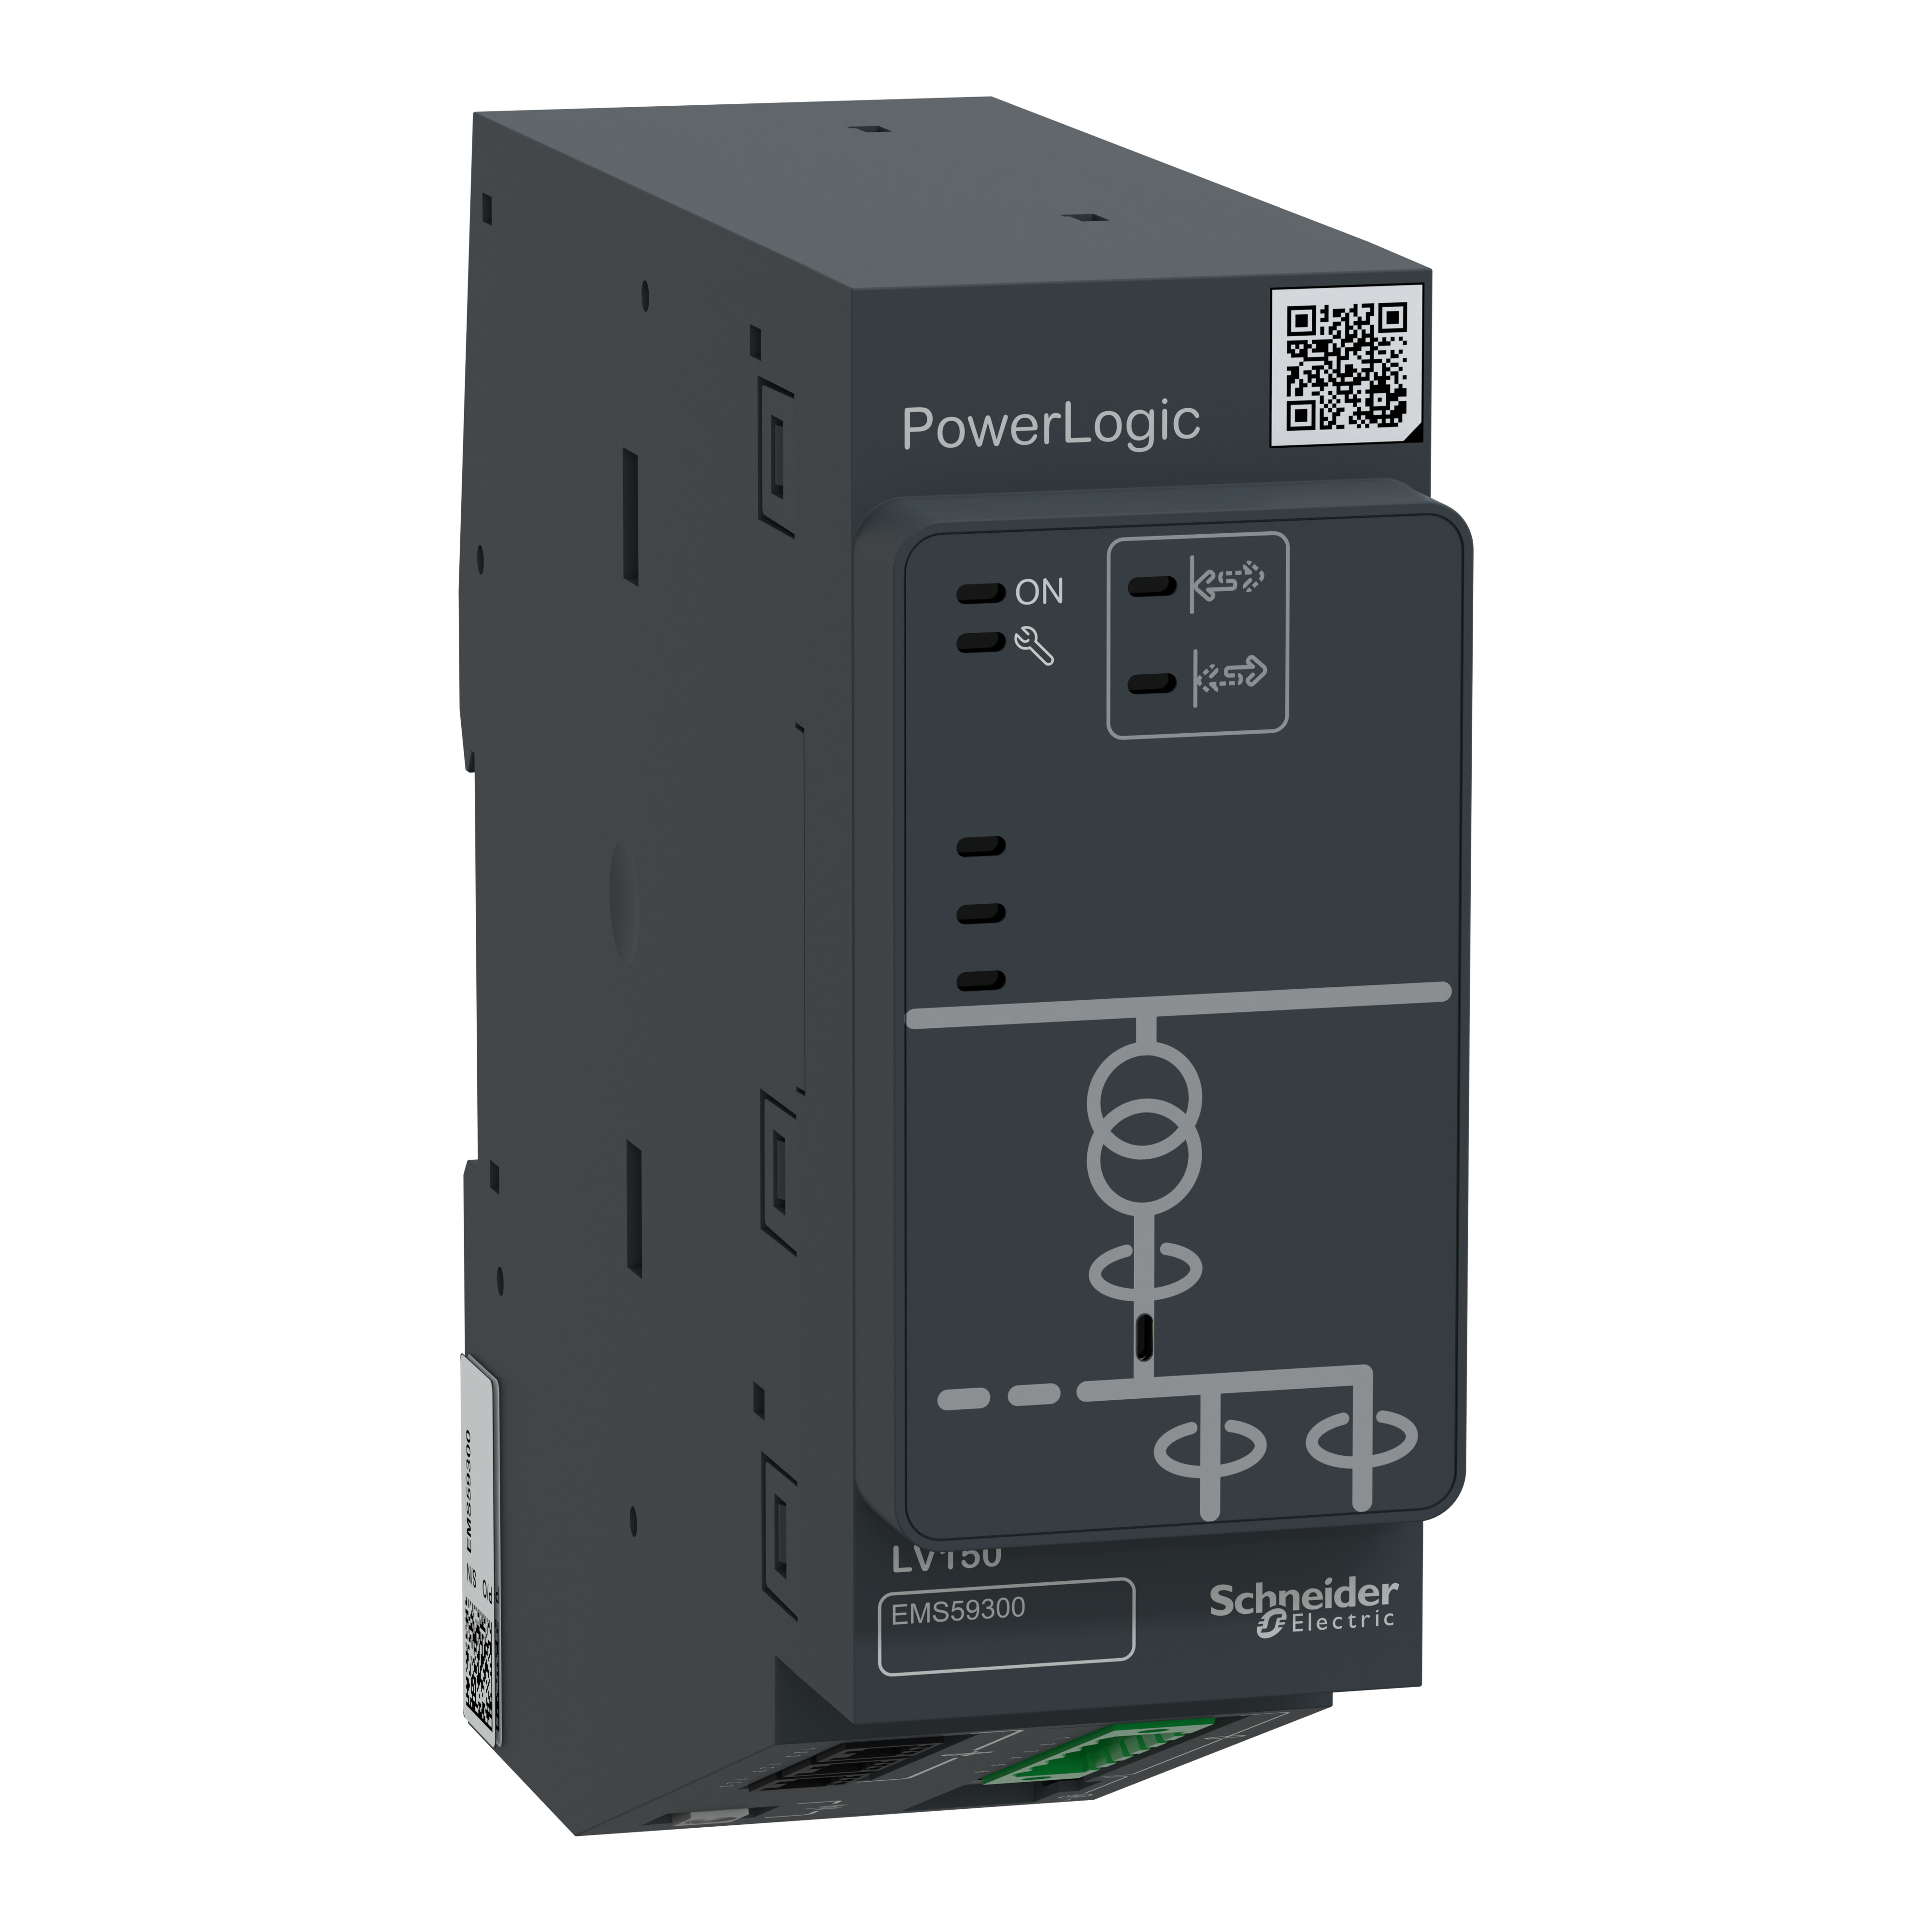 PowerLogic LV150: low voltage power monitoring and transformer thermal monitoring